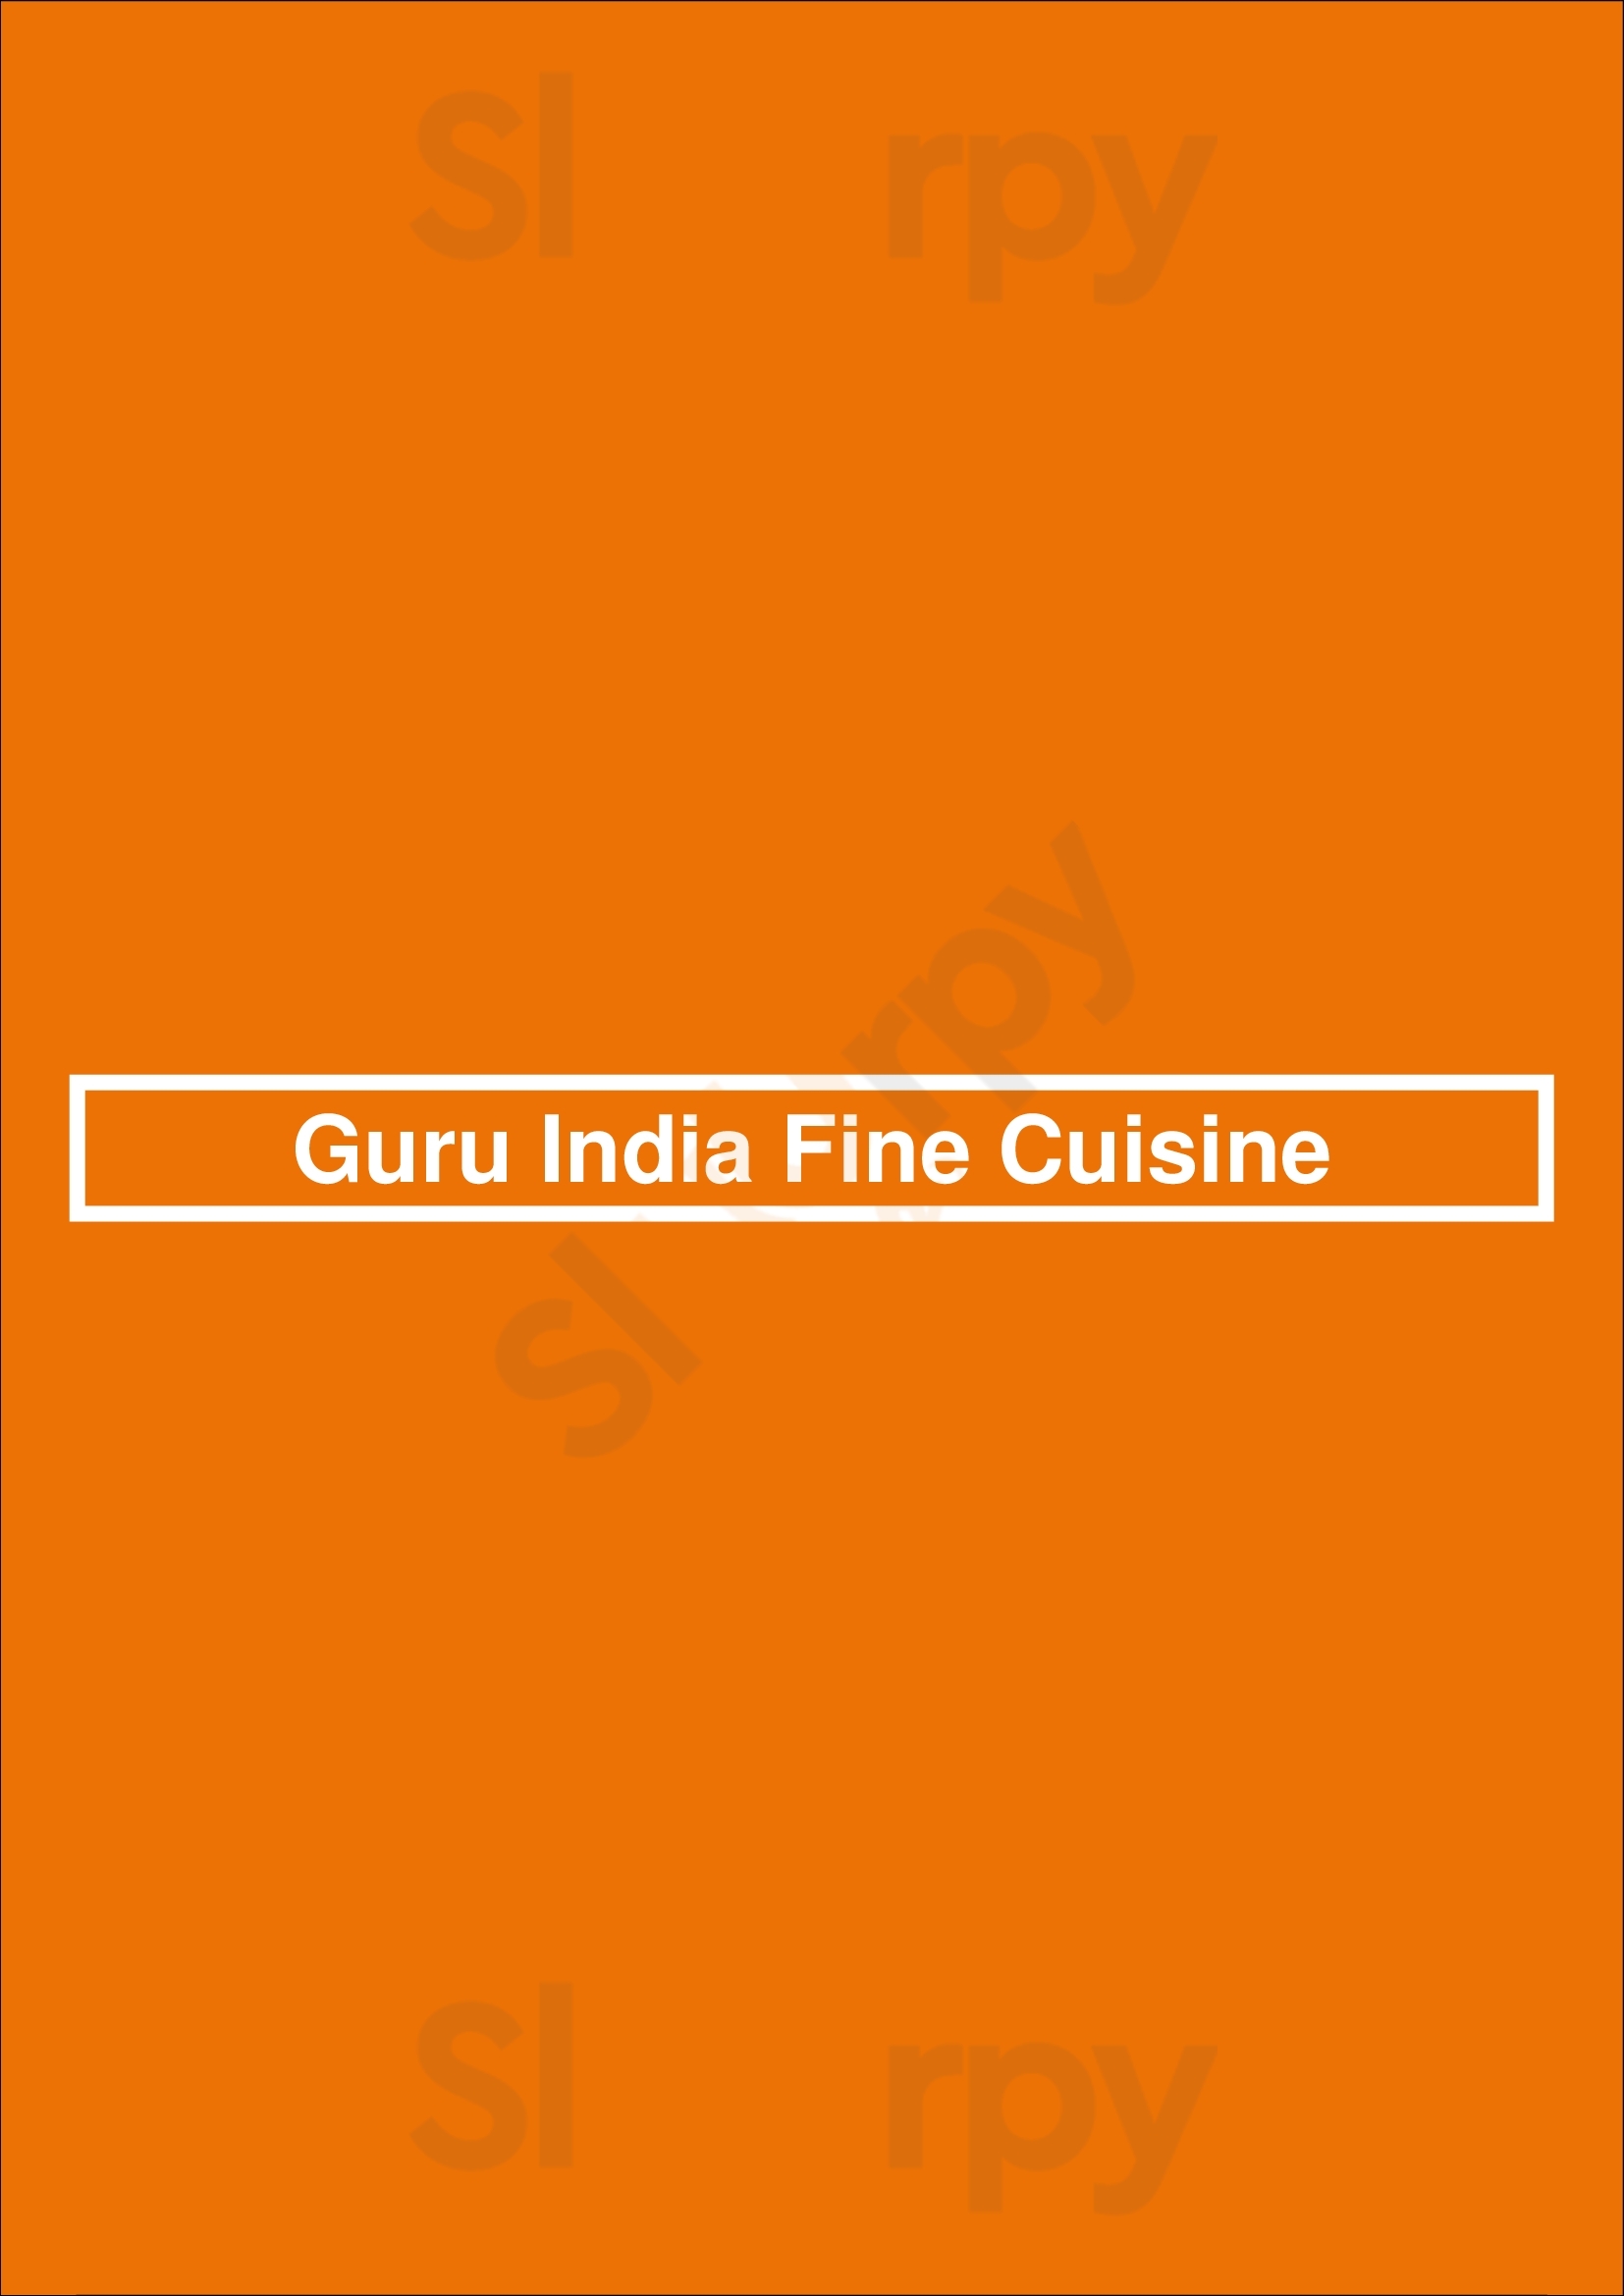 Guru India Fine Cuisine Calgary Menu - 1